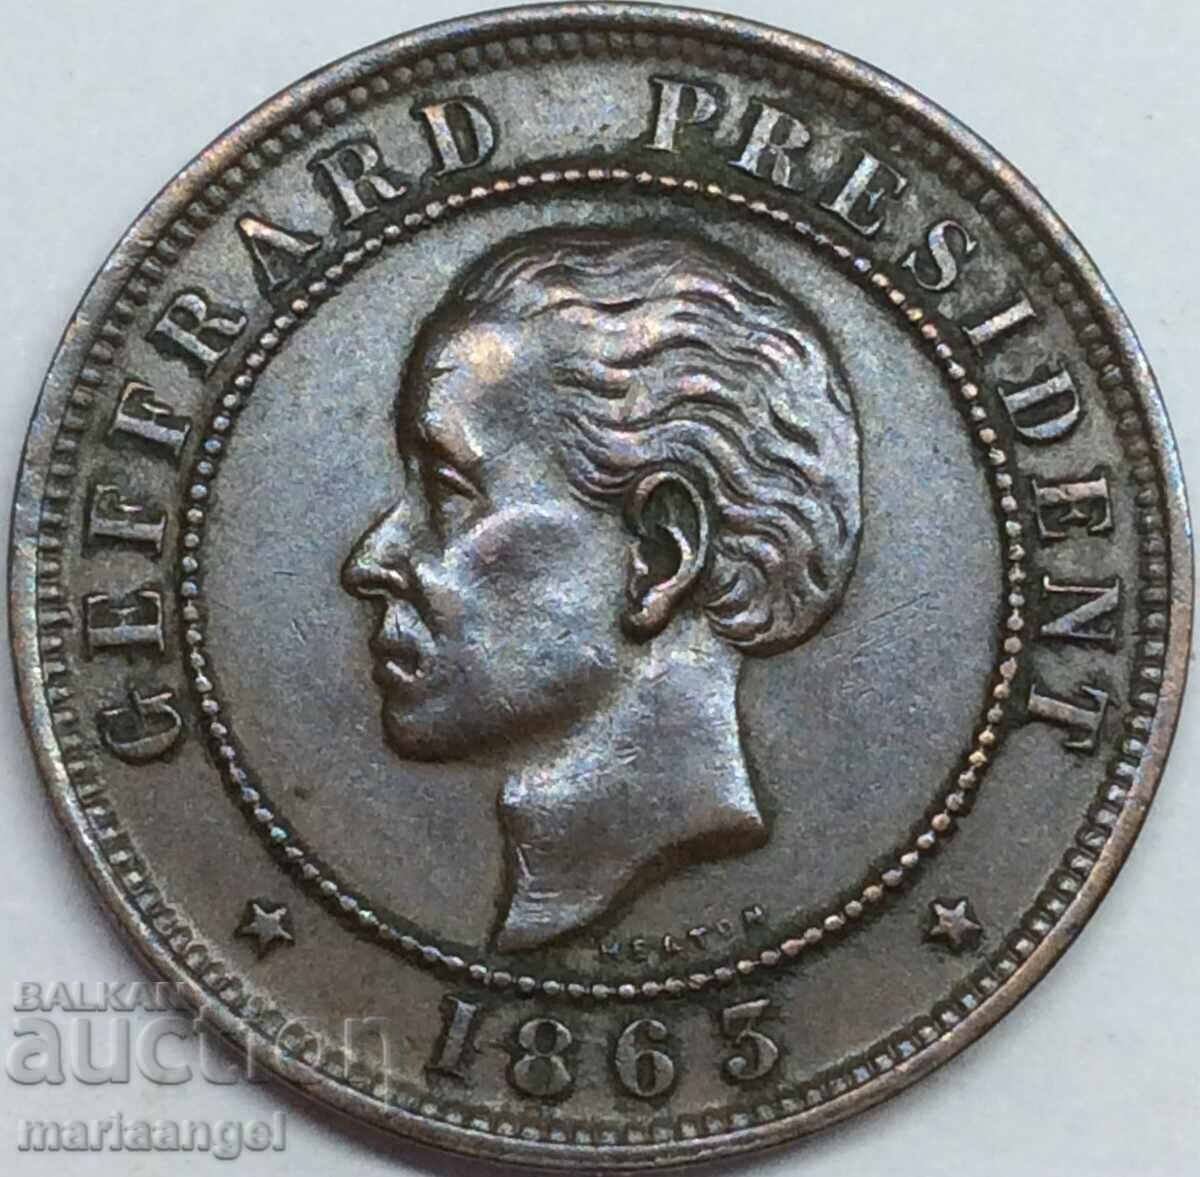 Haiti 1863 20 centimetri President 28mm bronz